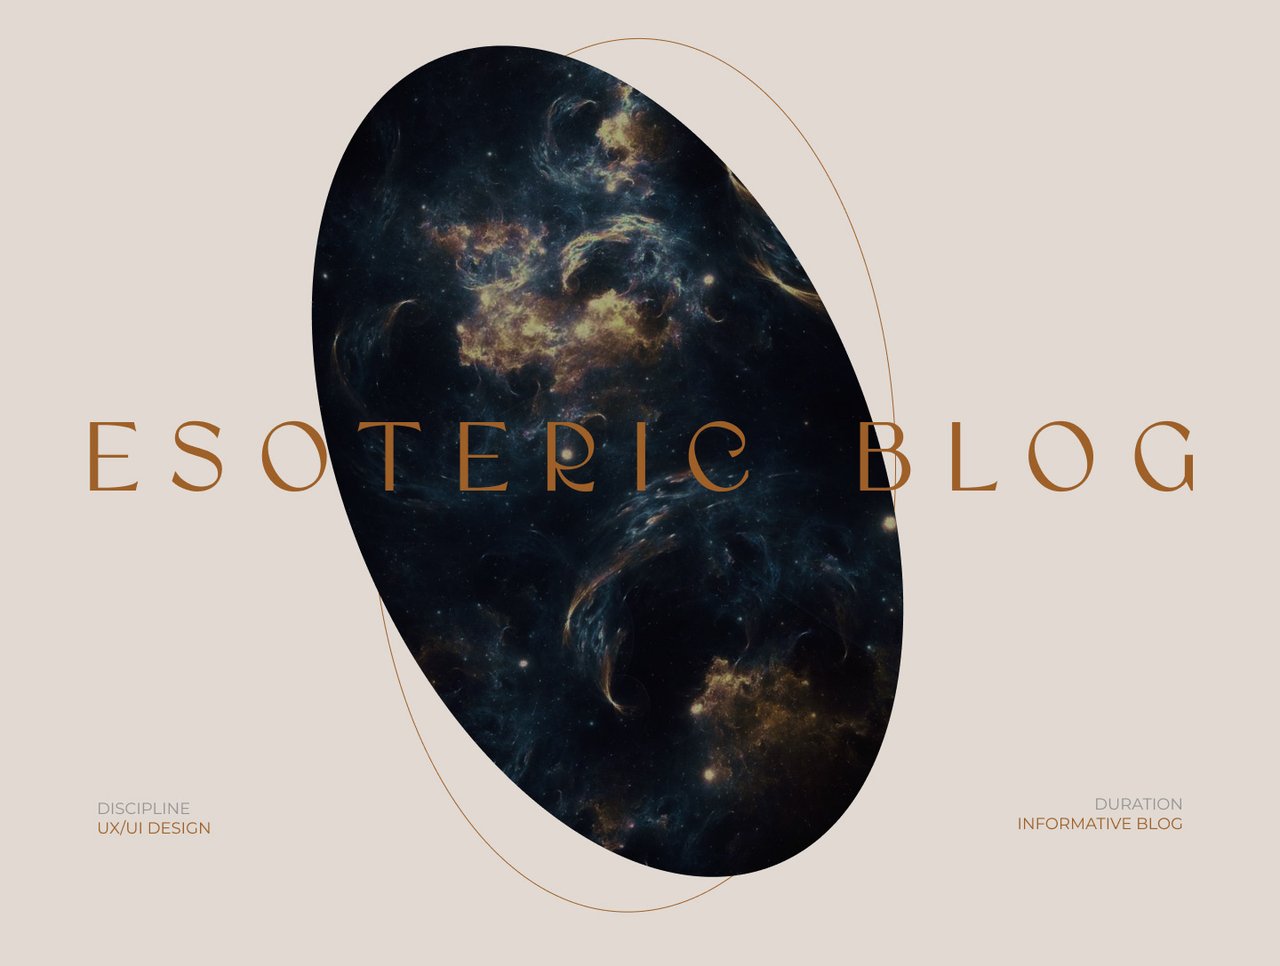 Esoteric blog | Web design.